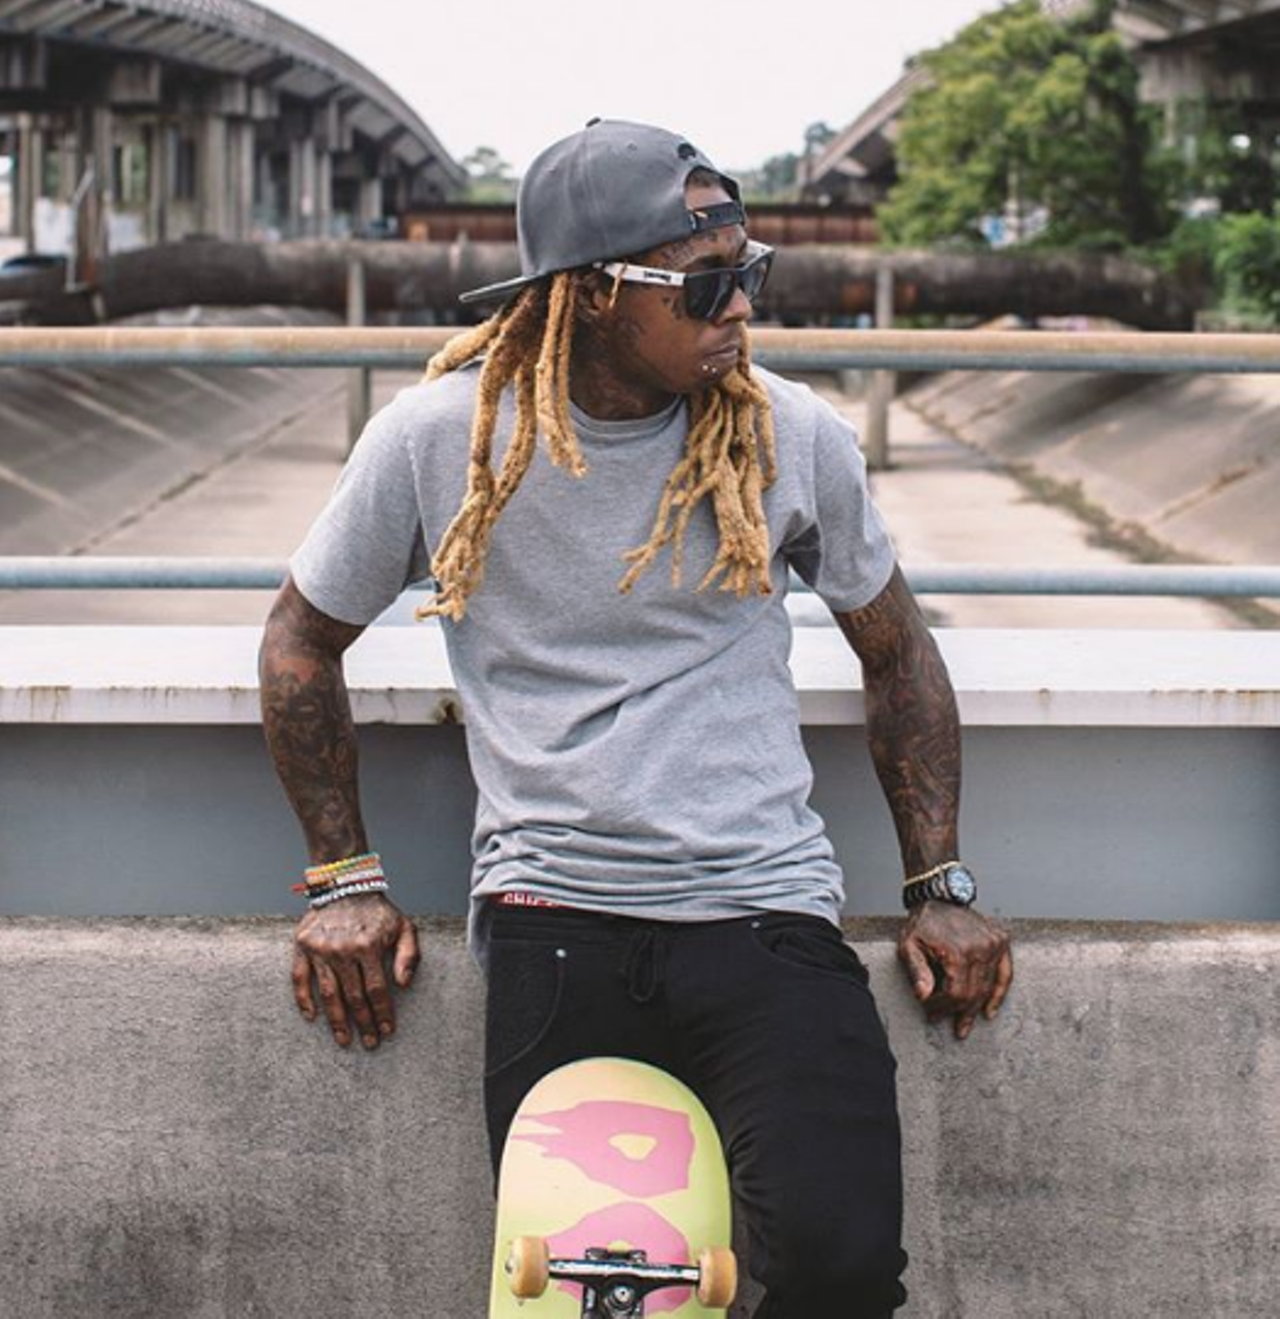 Lil Wayne – “Burn”
"Stop stuntin' if you ballin' buy your bitch something
Stayed on the same team like Tim Duncan."
Photo via Instagram / liltunechi